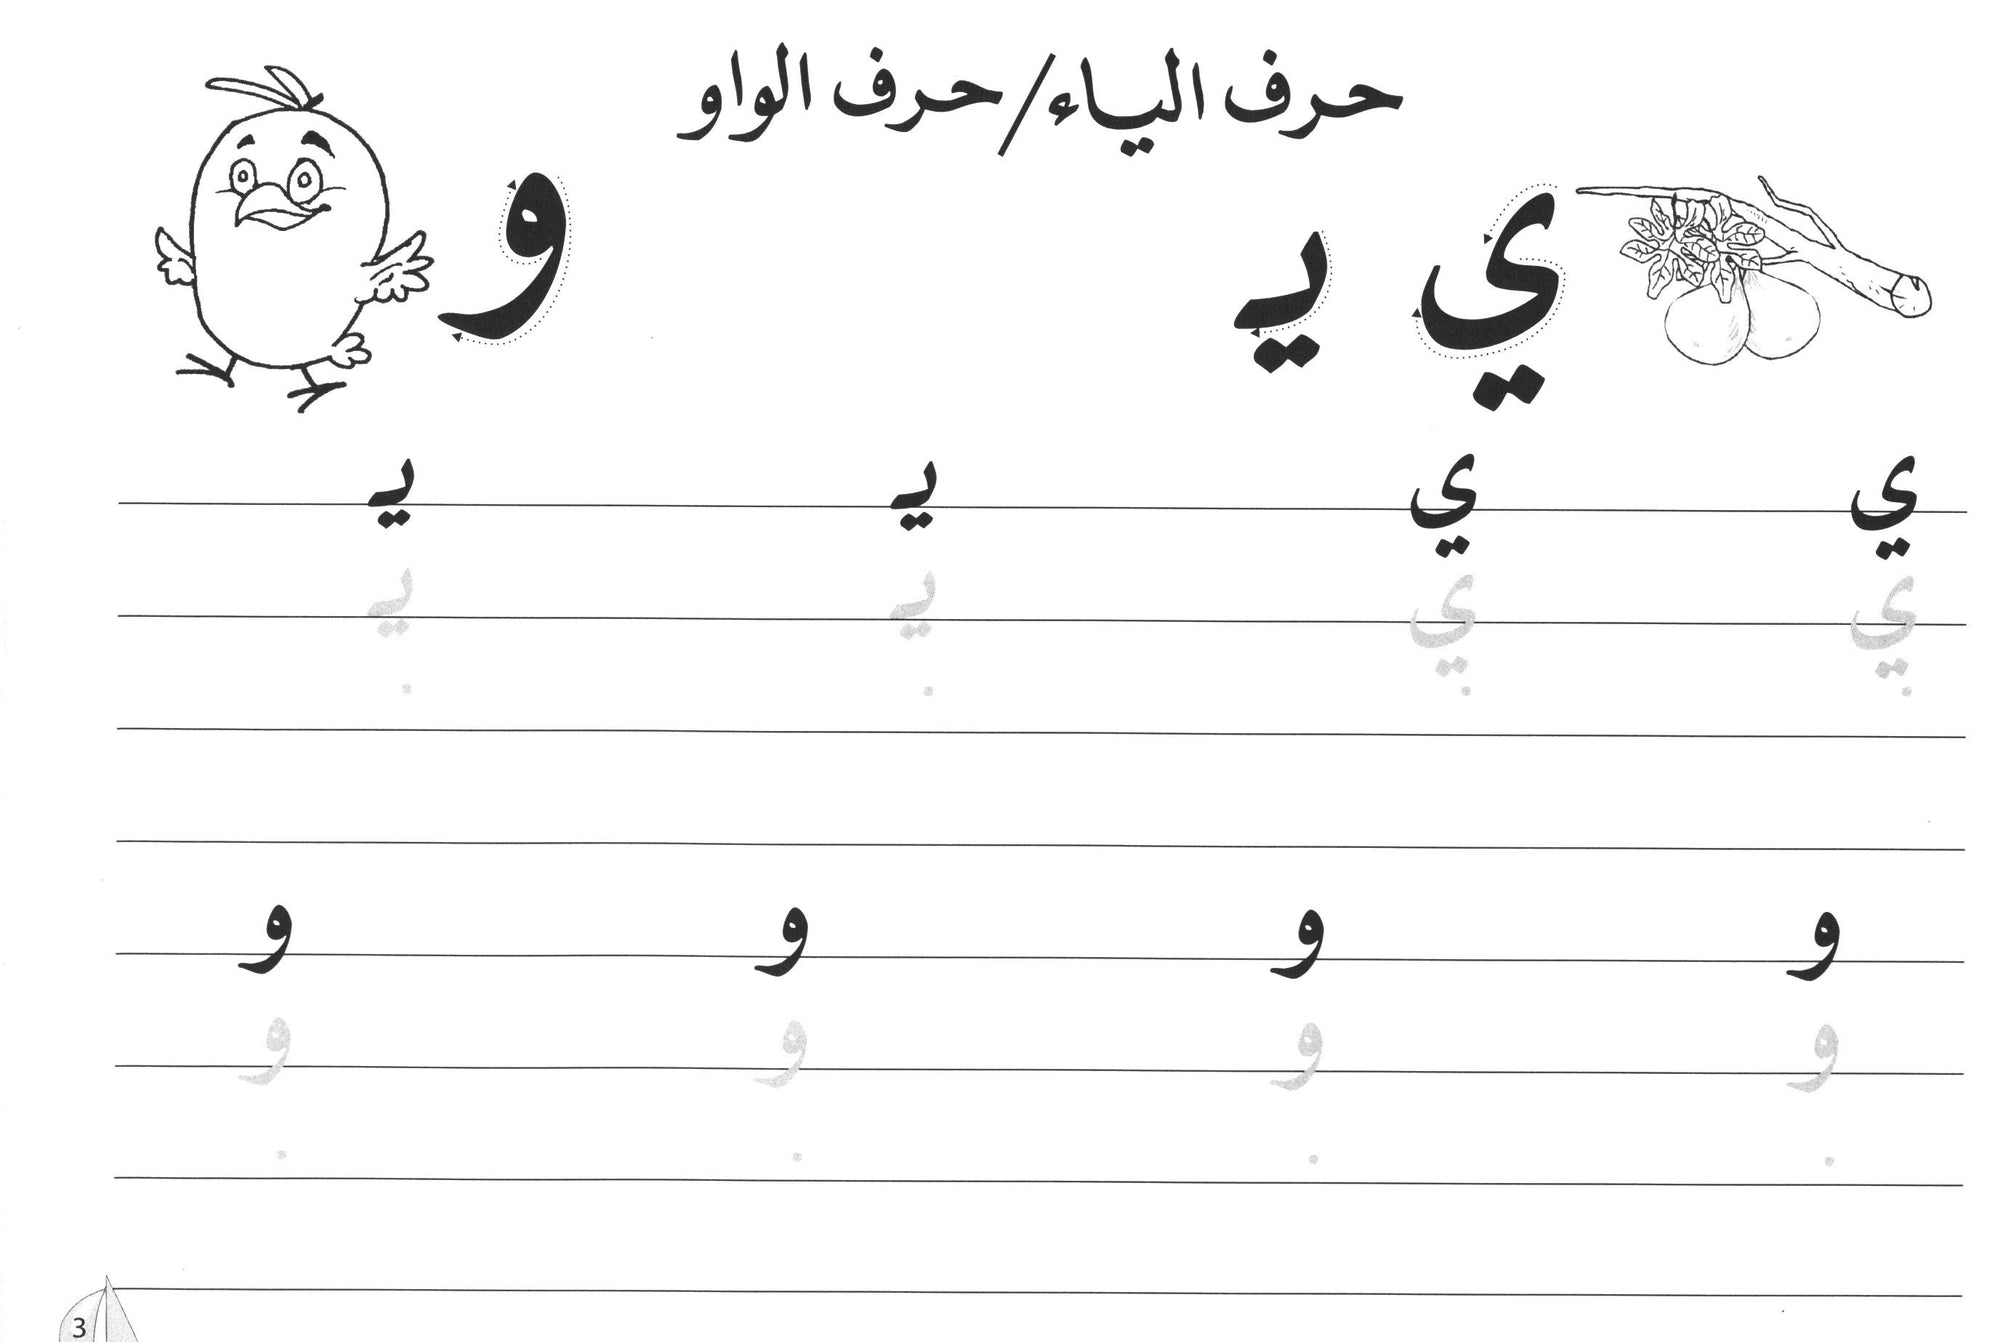 Al-Rowad Arabic Calligraphy Naskh Font Level 1